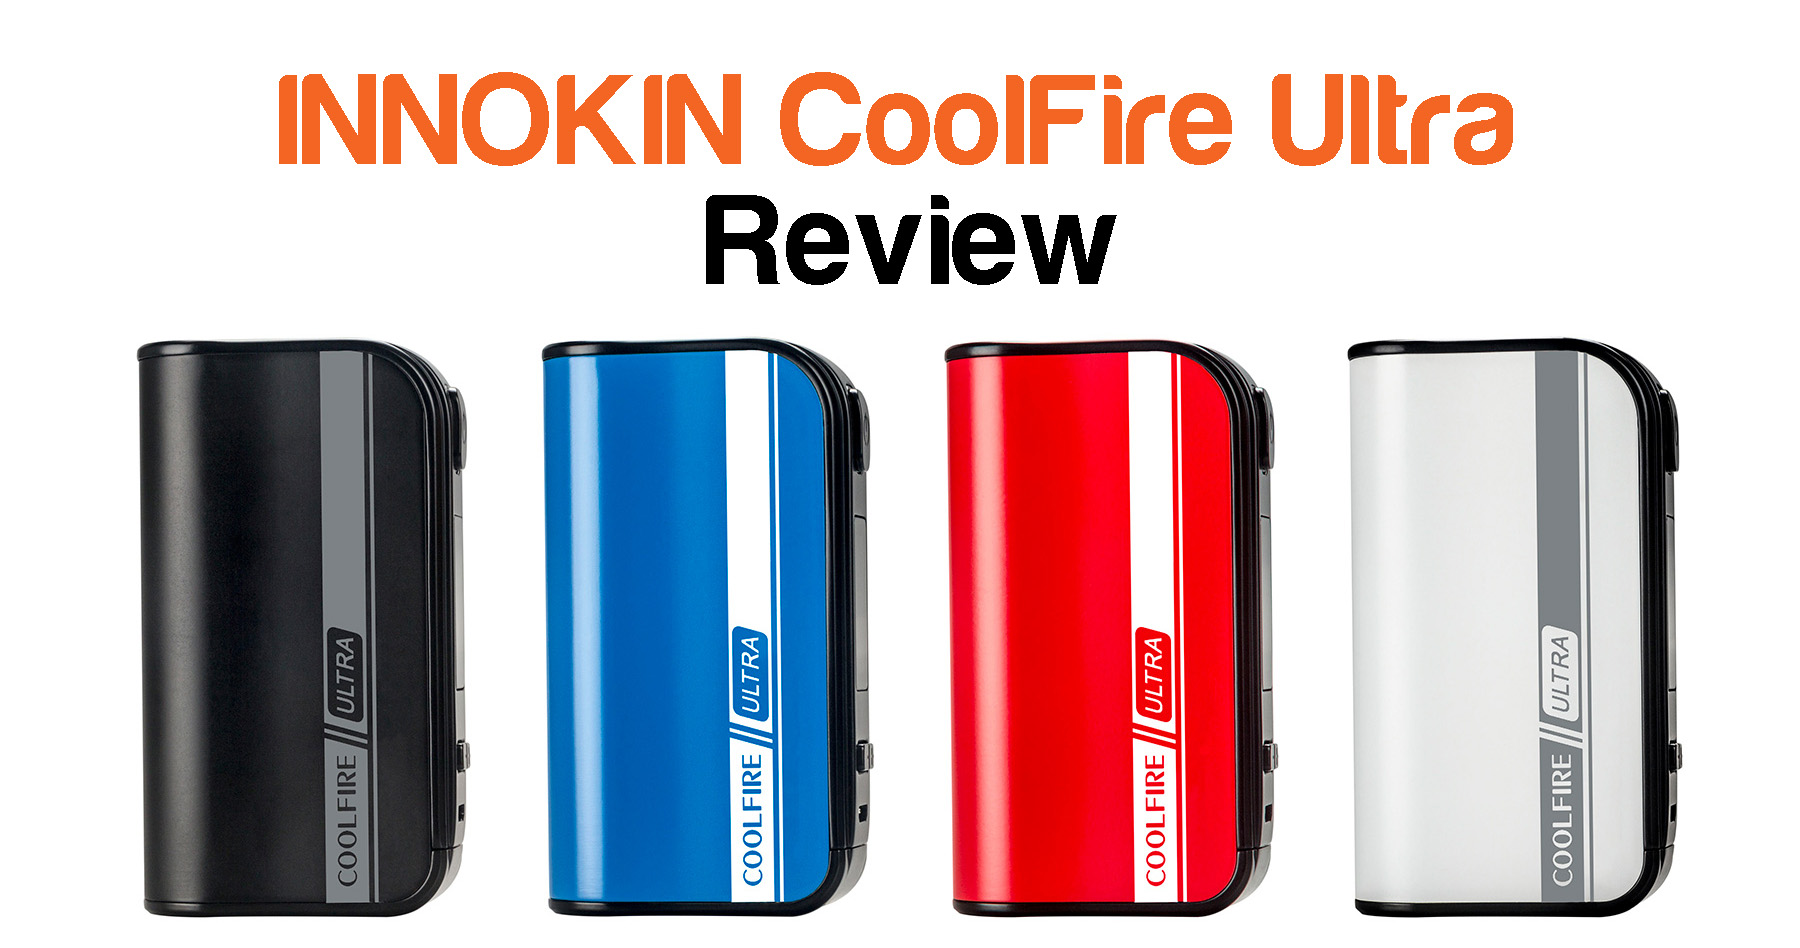 Innokin Coolfire Ultra Review